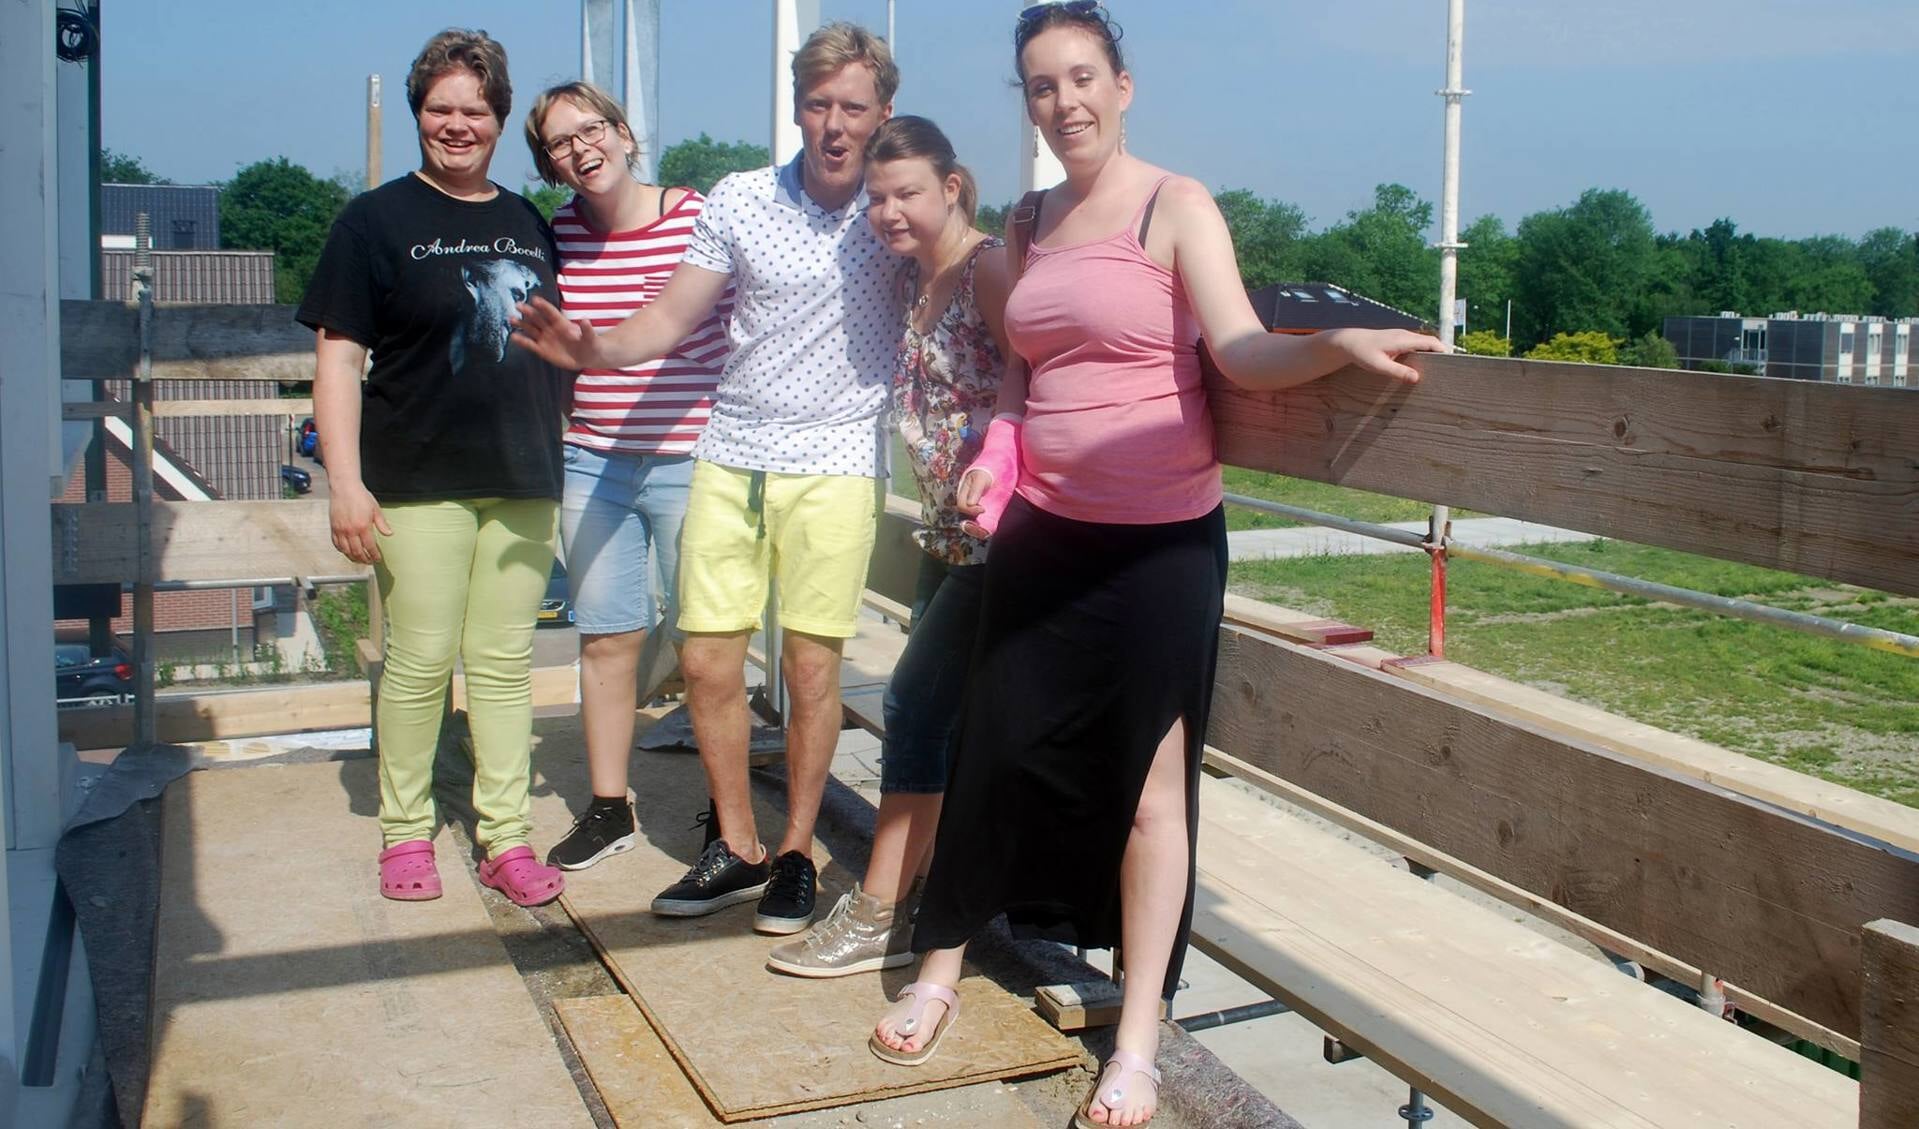 Enkele toekomstige bewoners van Nieuw Varne. Van links naar rechts: Amber, Anne-kay, Nick, Marieke, Marleen  (Foto: Evert Visser)